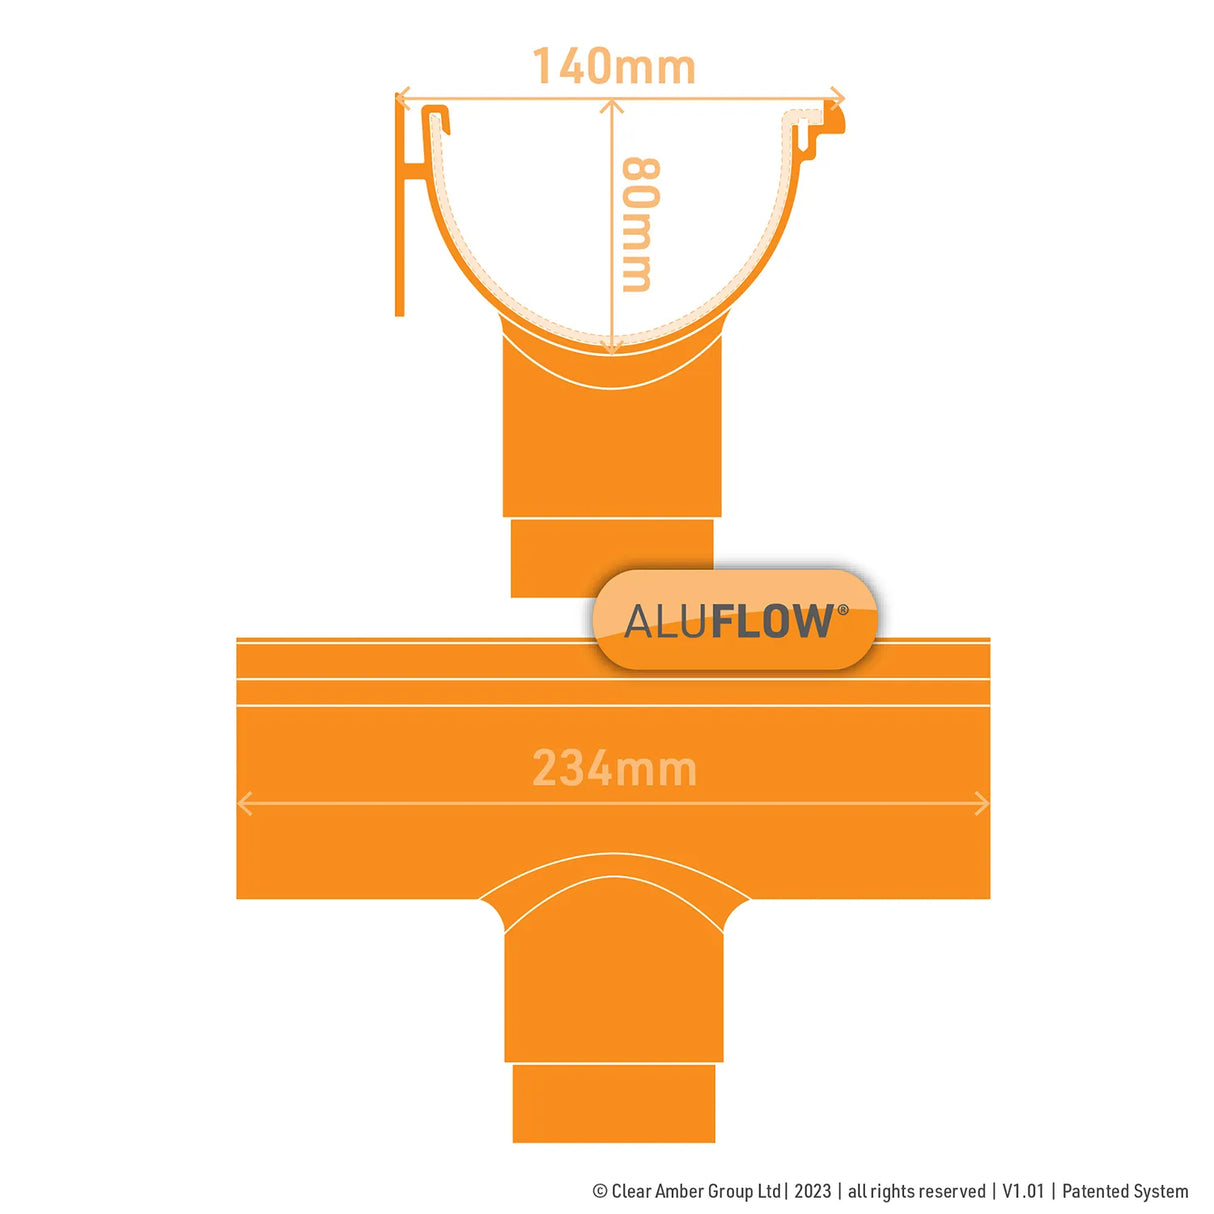 aluflow-running-outlet-measurements-234mm-140mm-80mm